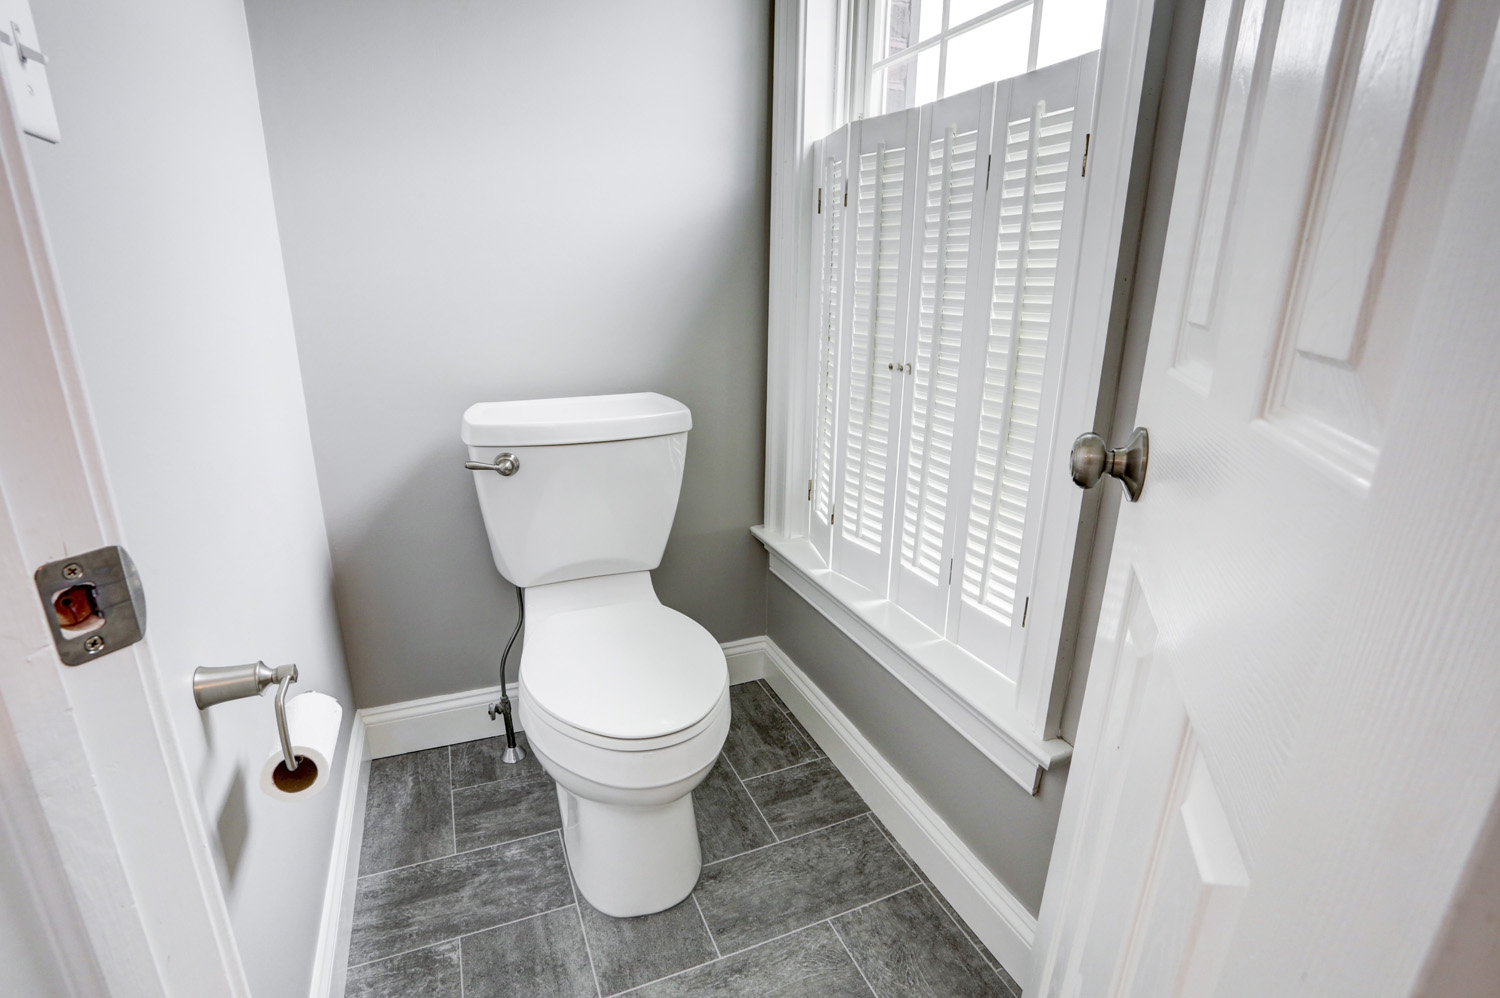 Separate Toilet room in Manheim Township Master Bathroom Remodel